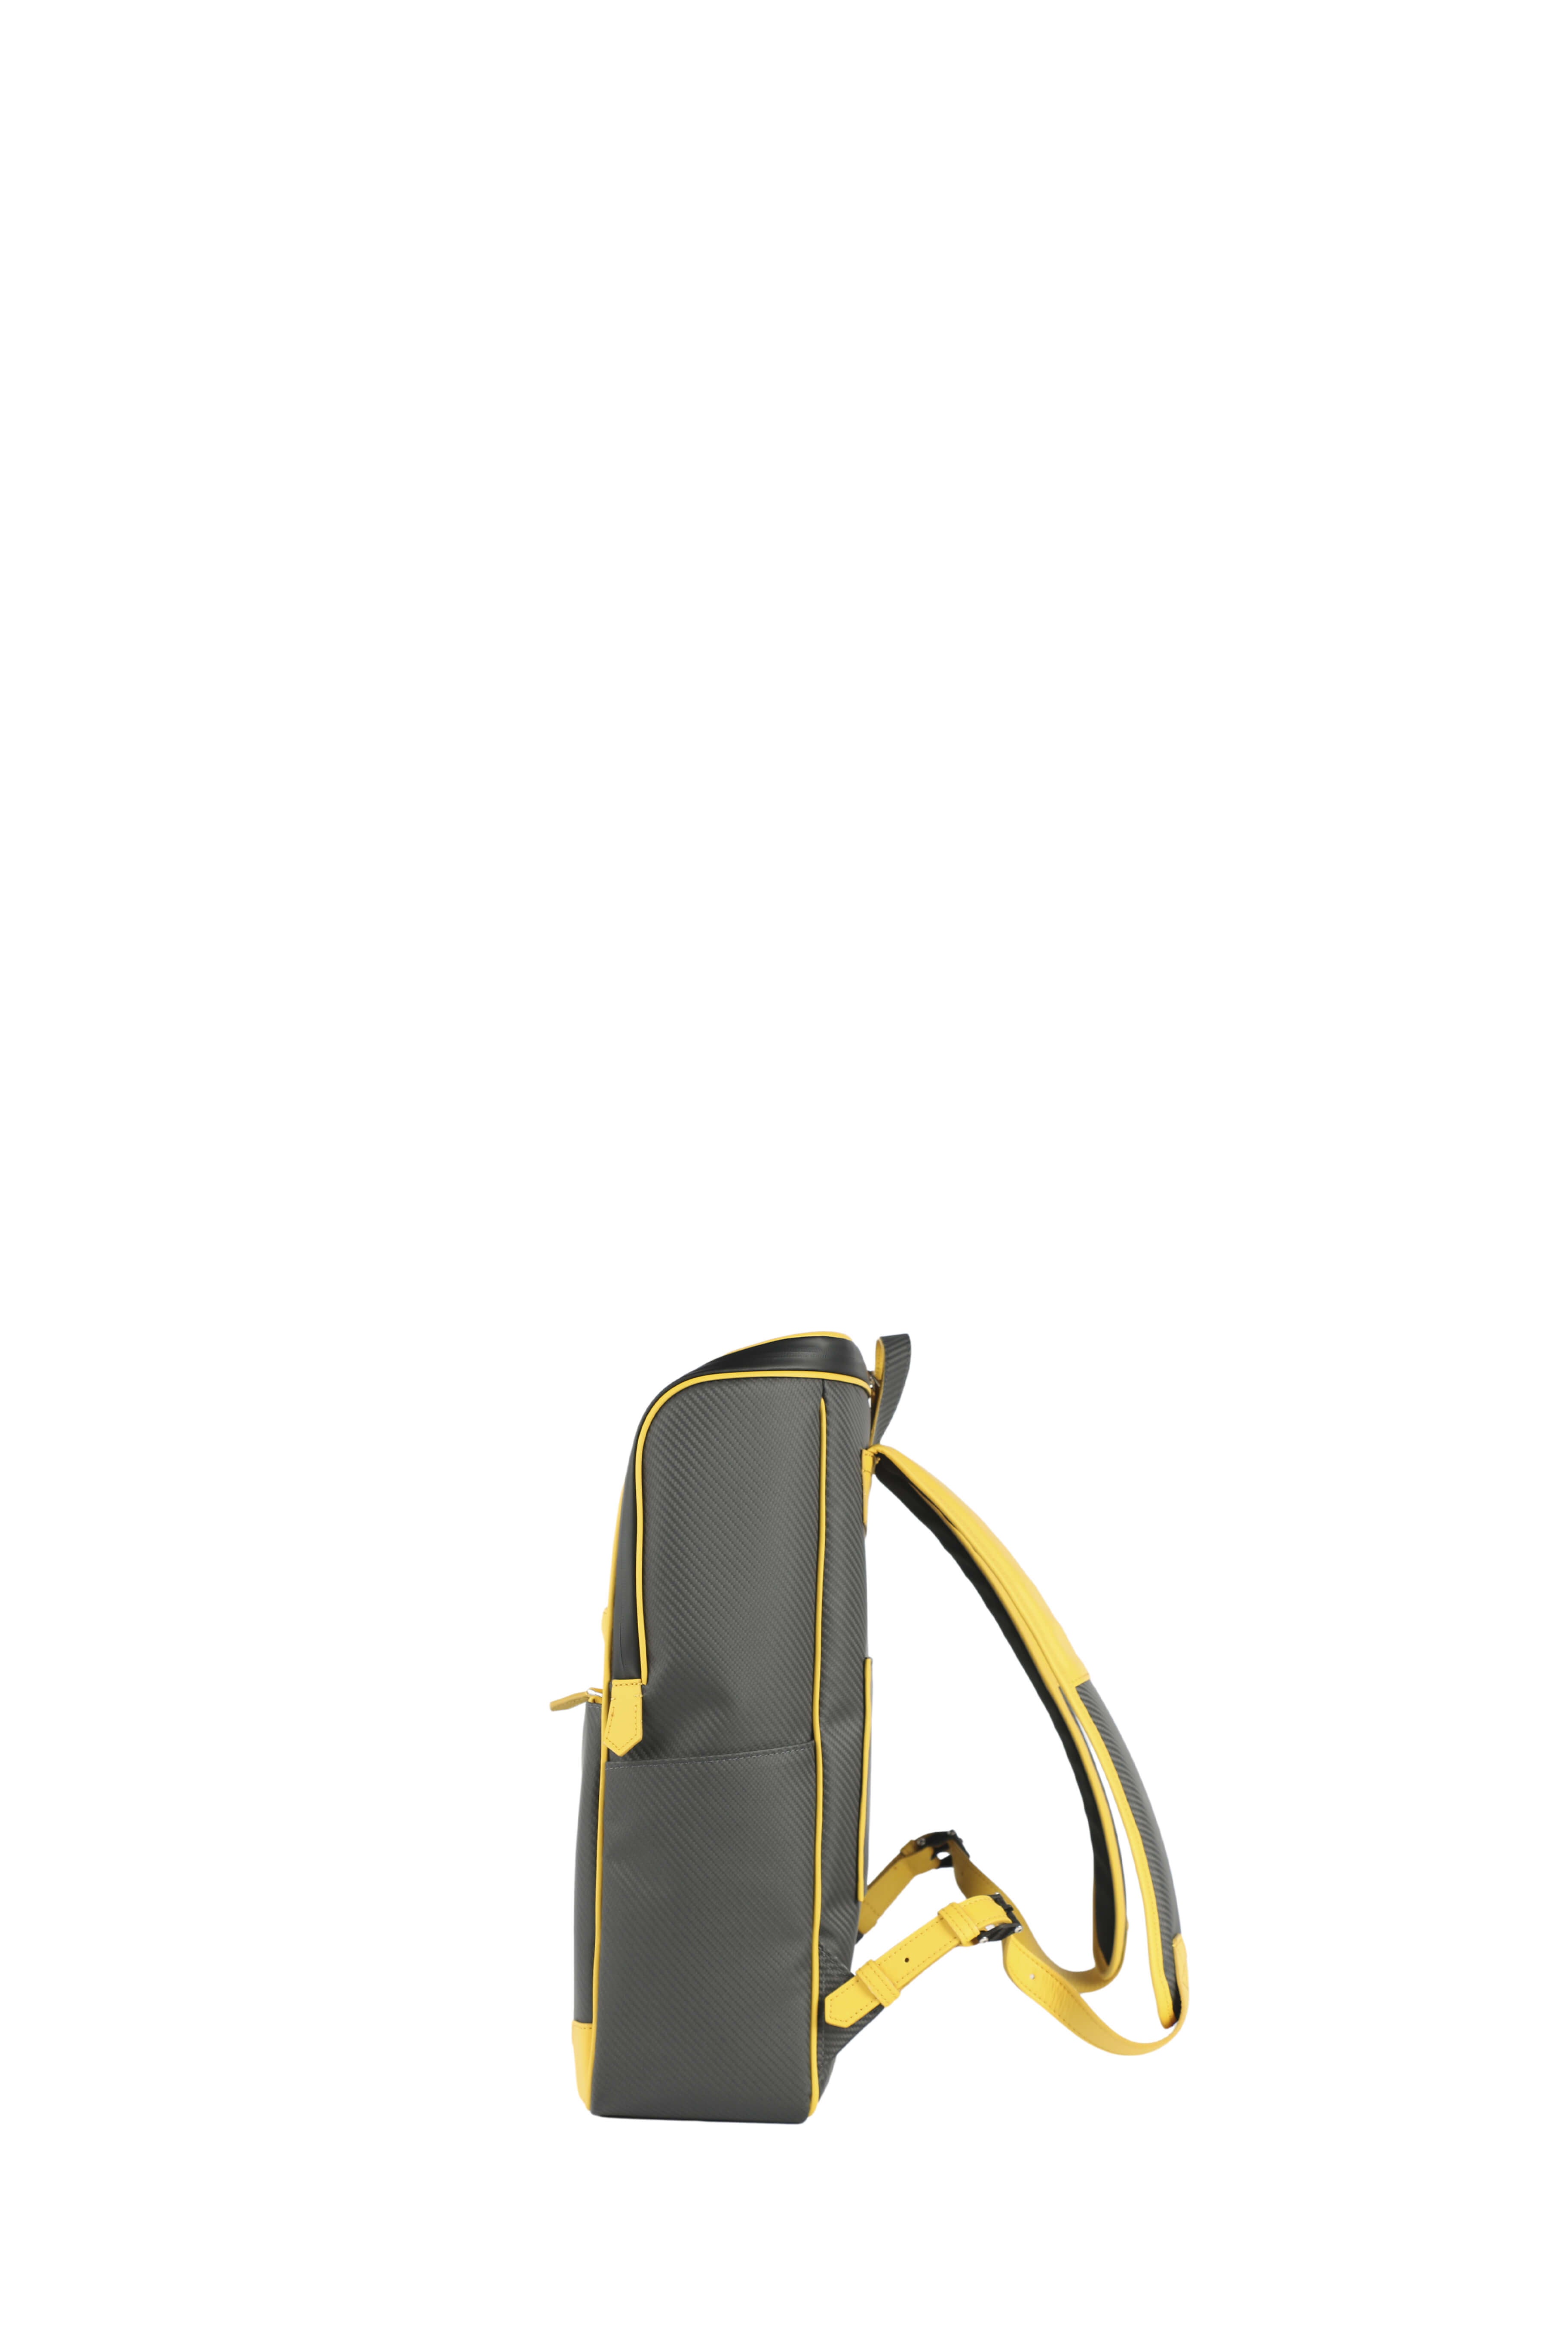 Dropper Soft Carbon Fiber Backpack, Yellow